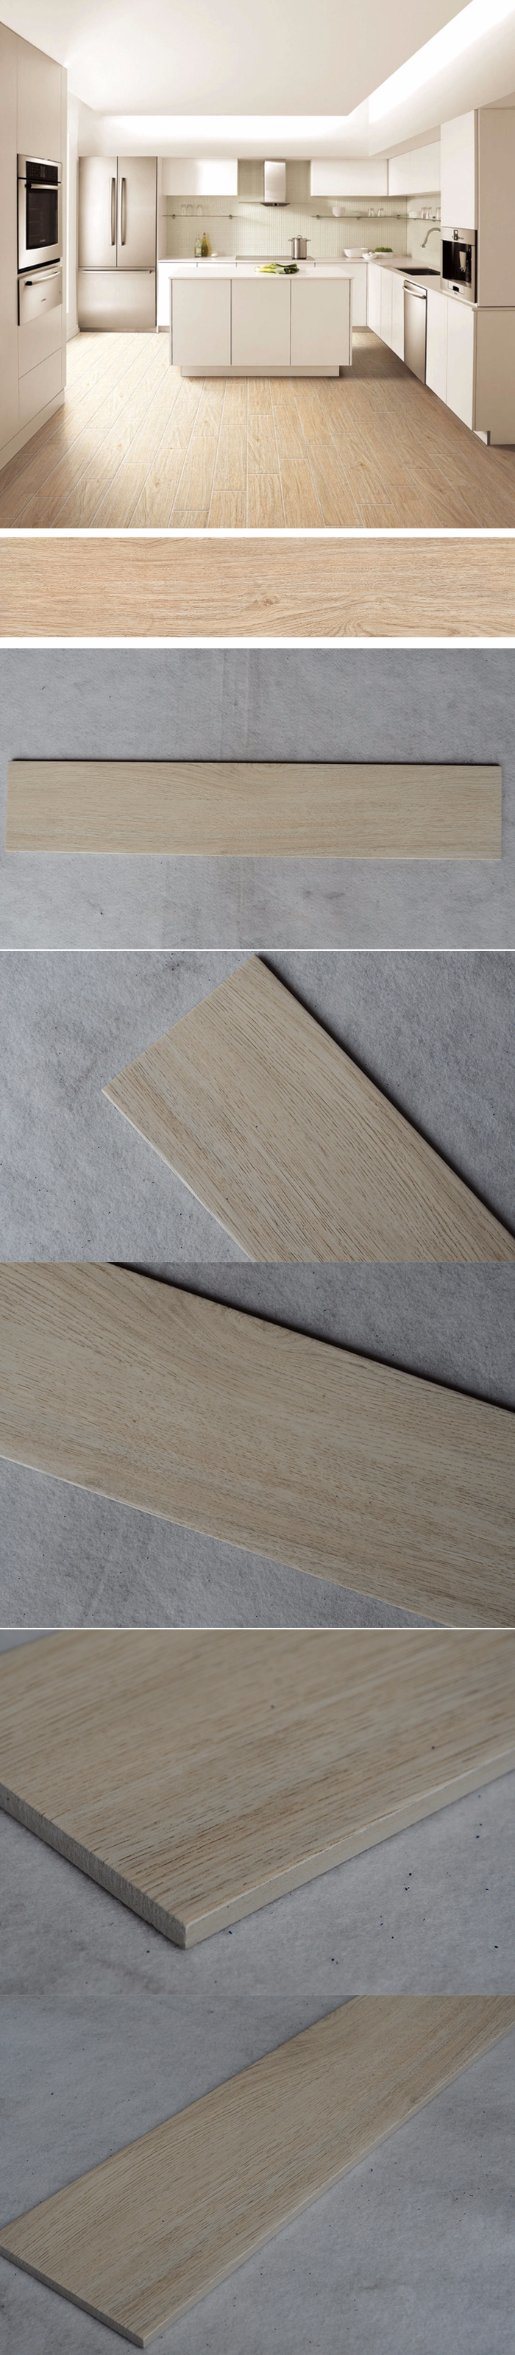 Indoor Wood Pattern Wood Grain Wood Design Ceramic Floor Tile